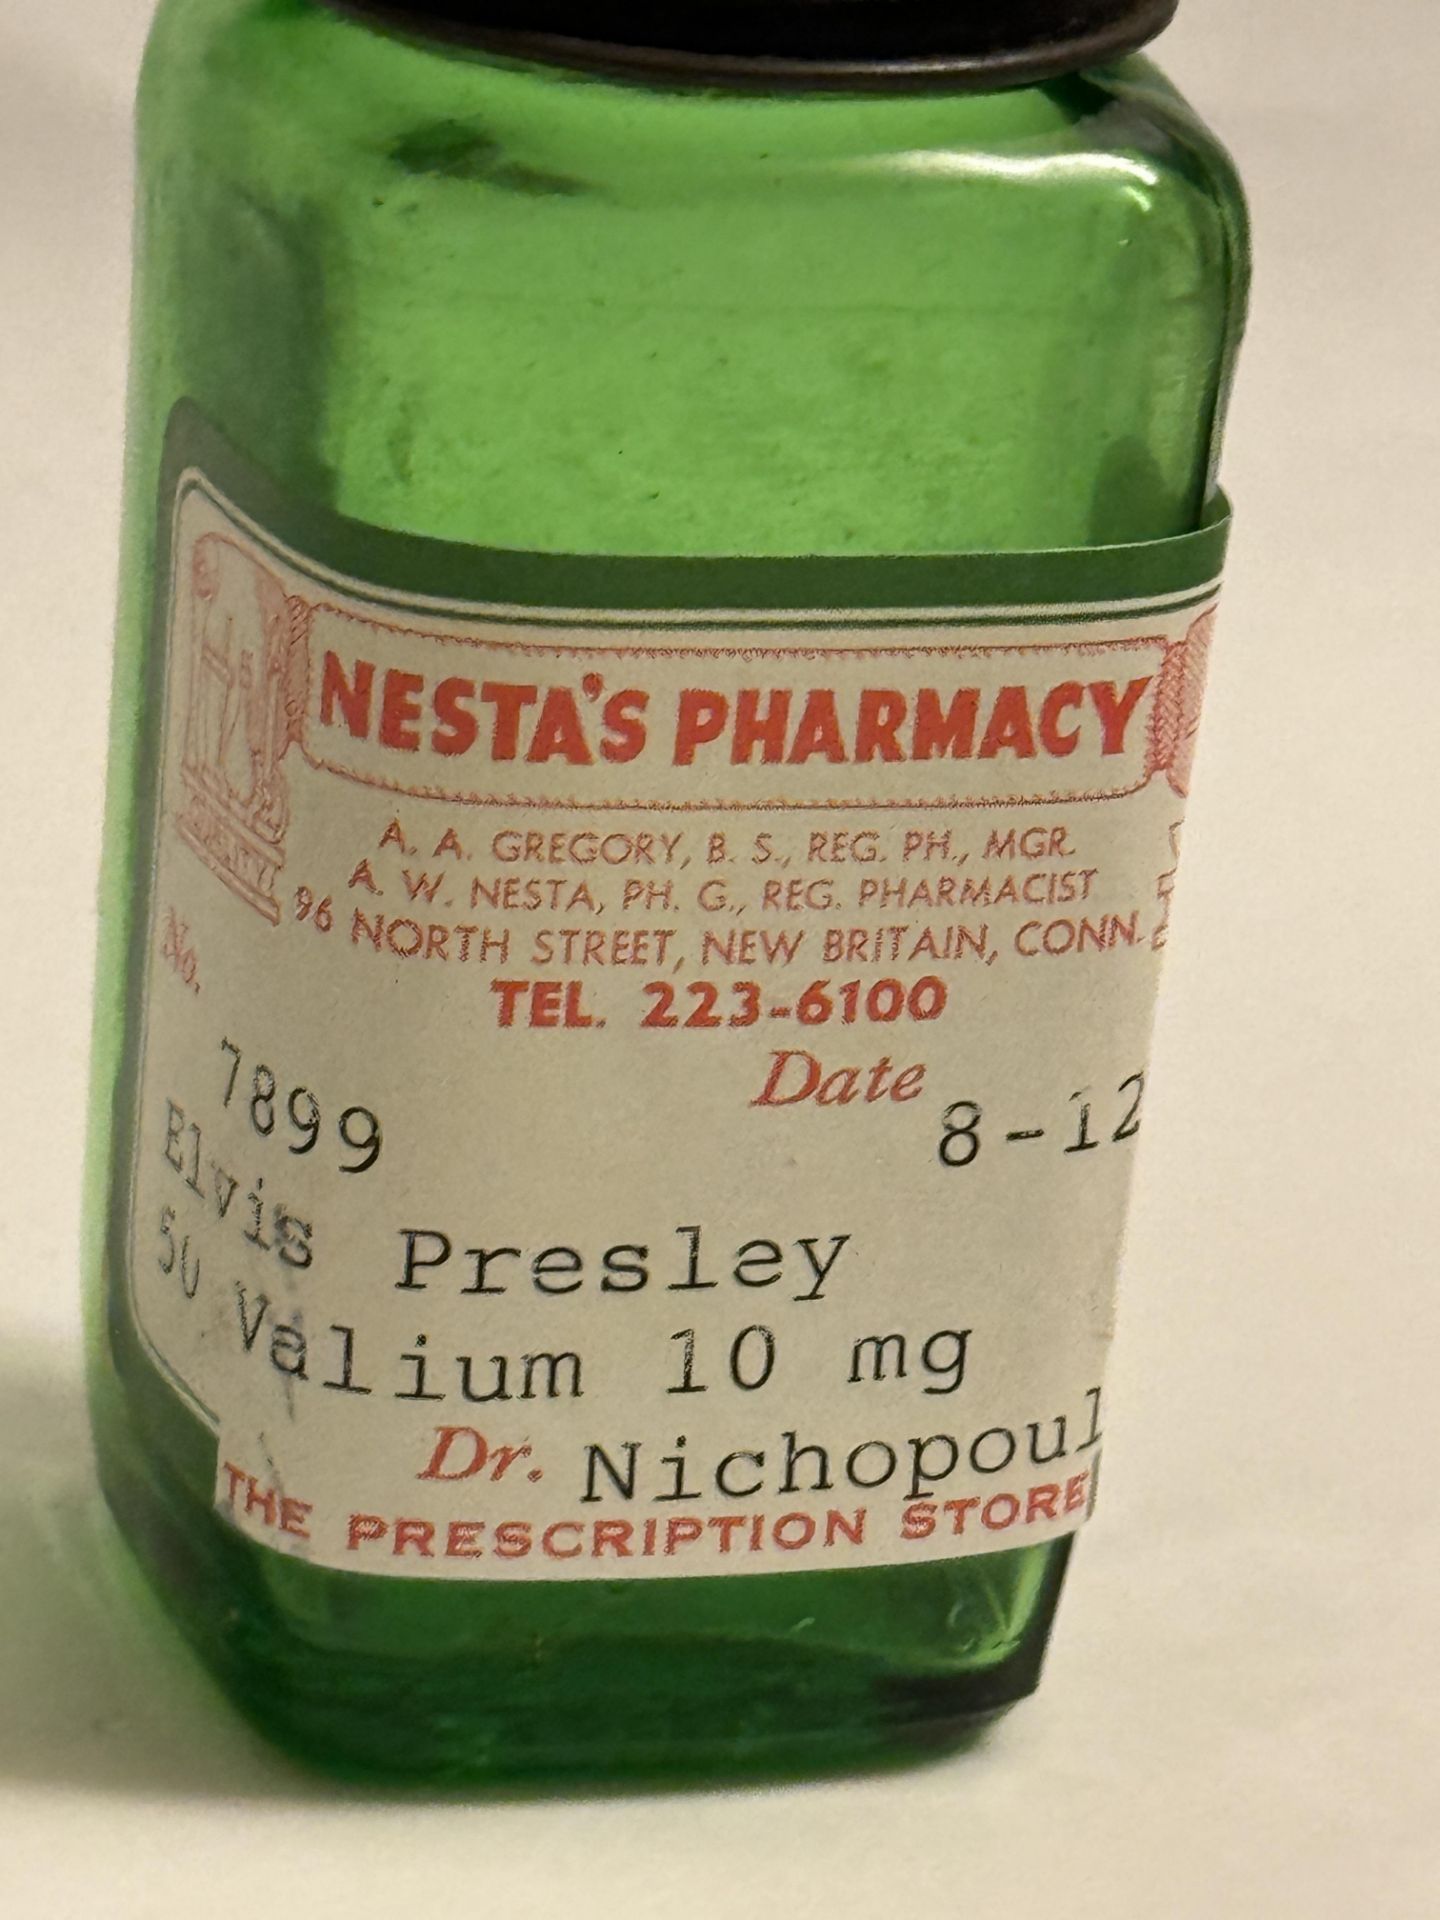 Elvis Presley Valium prescription bottle - Image 5 of 7